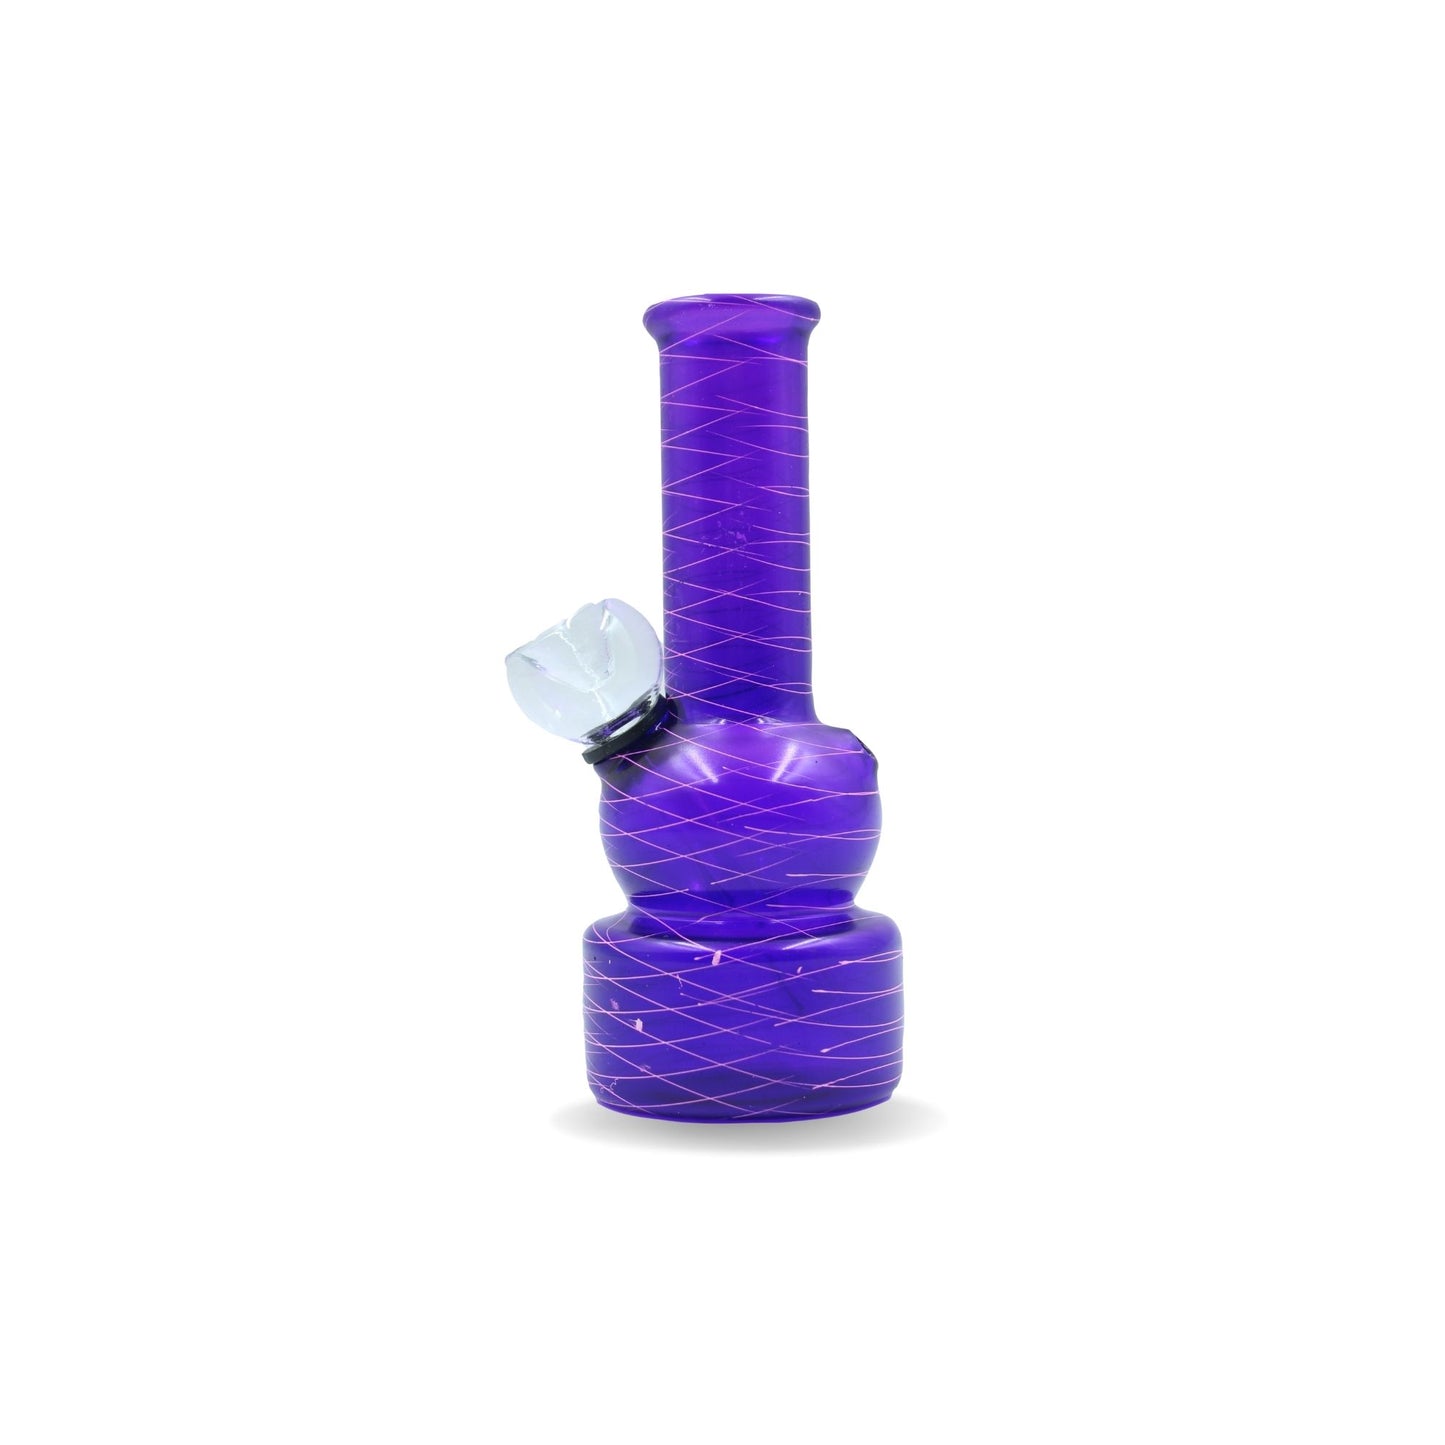 Pocket Rocket Mini Bong - Purple Haze